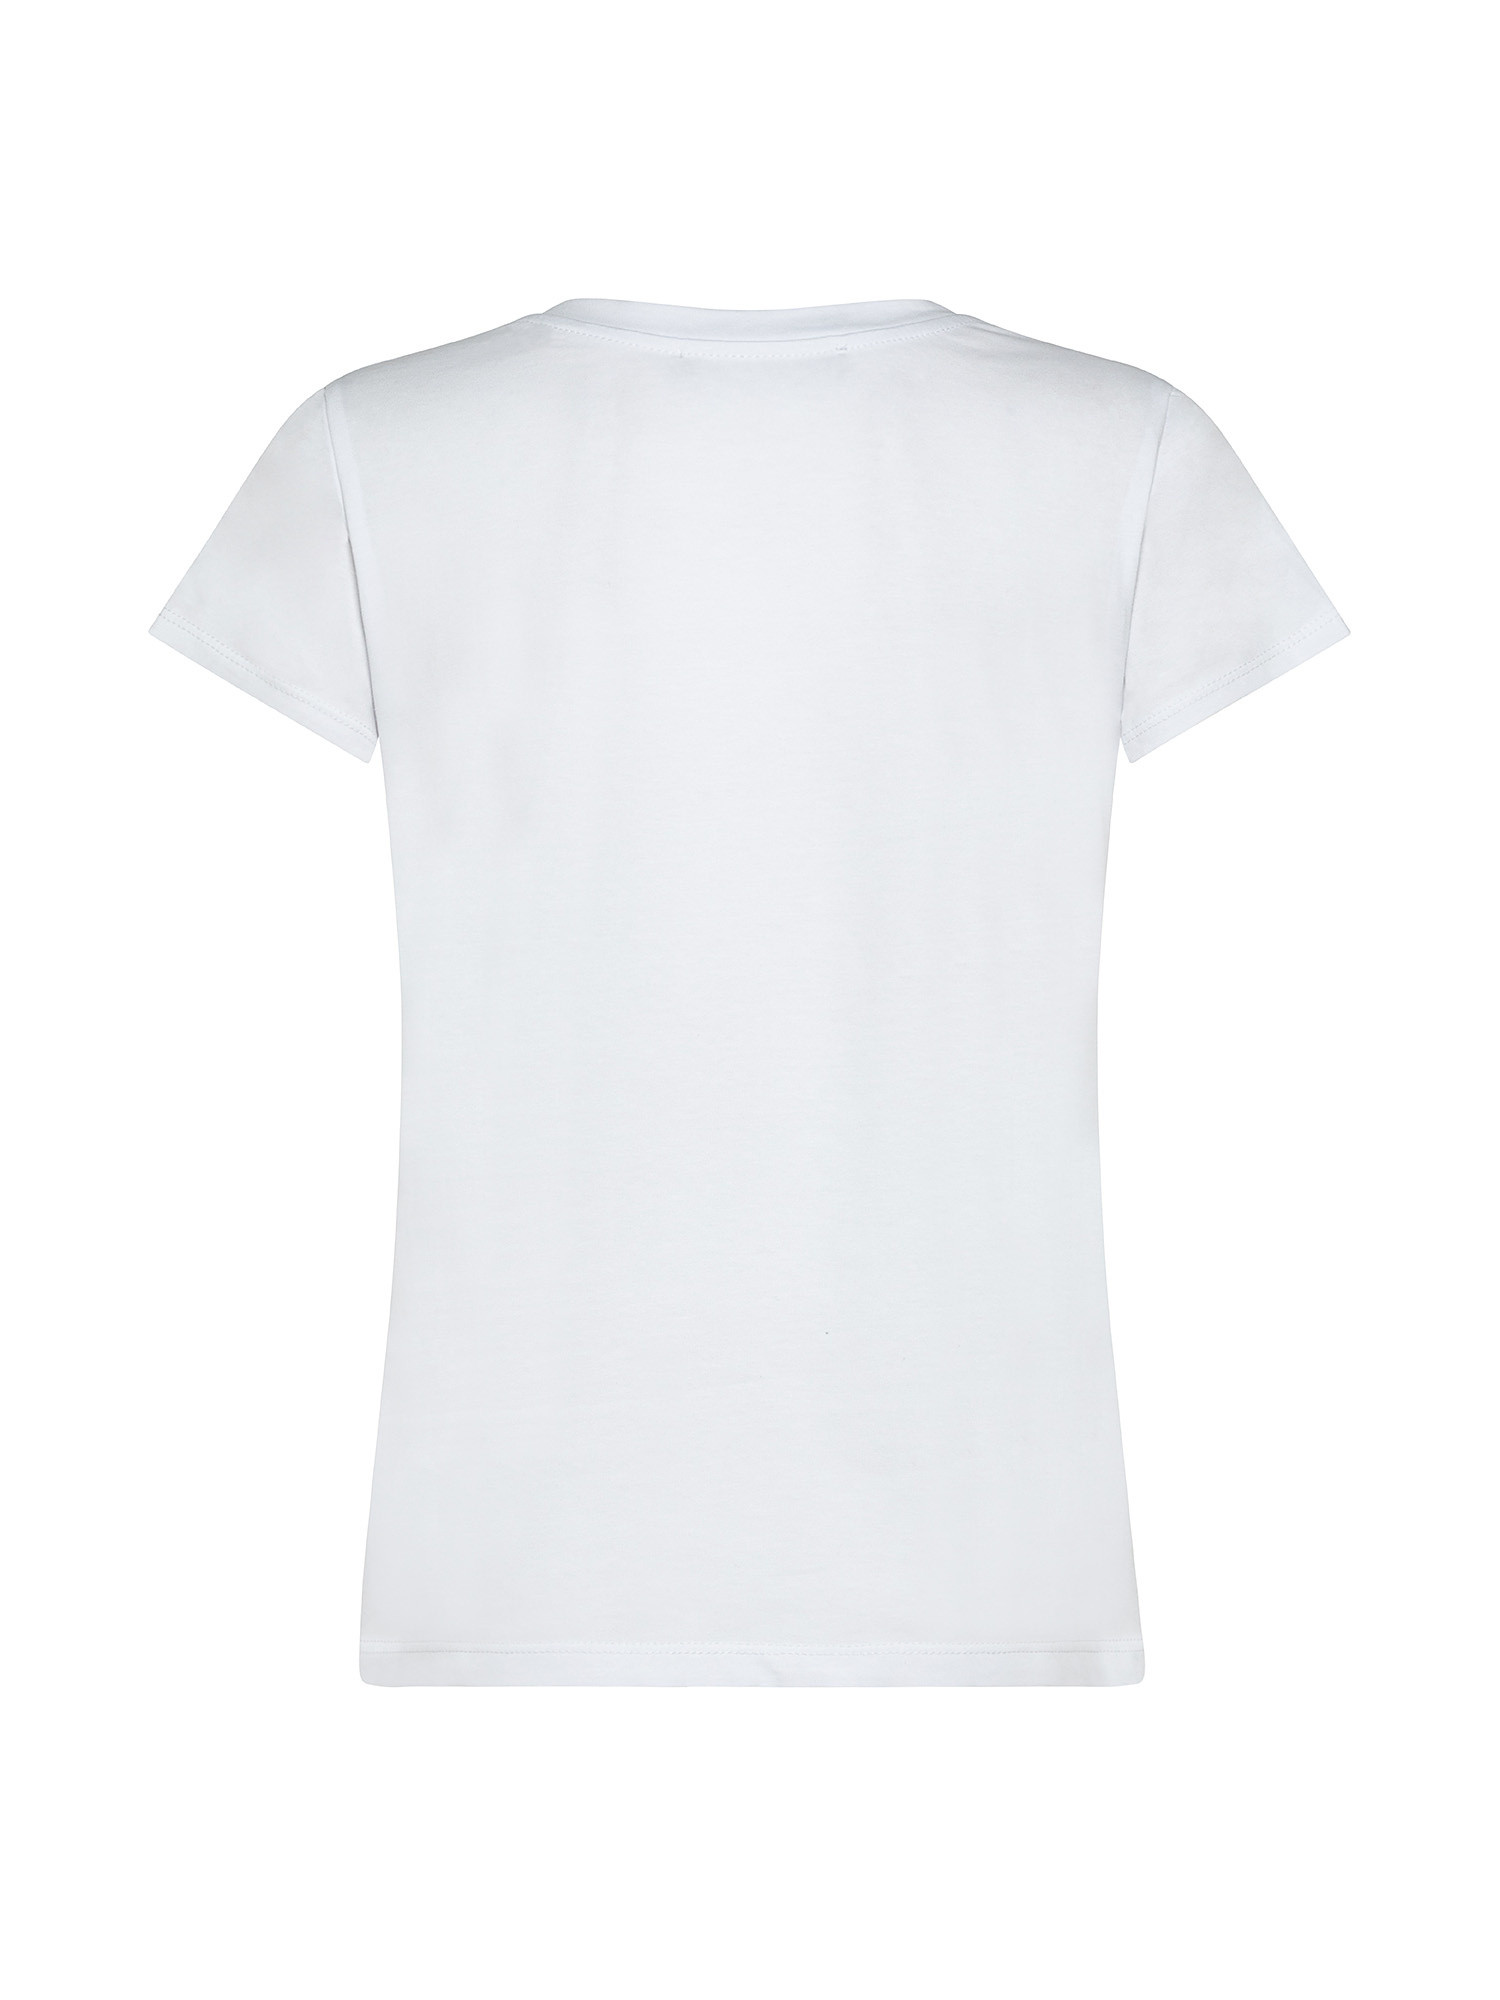 T-shirt girocollo con cuori, Bianco, large image number 1